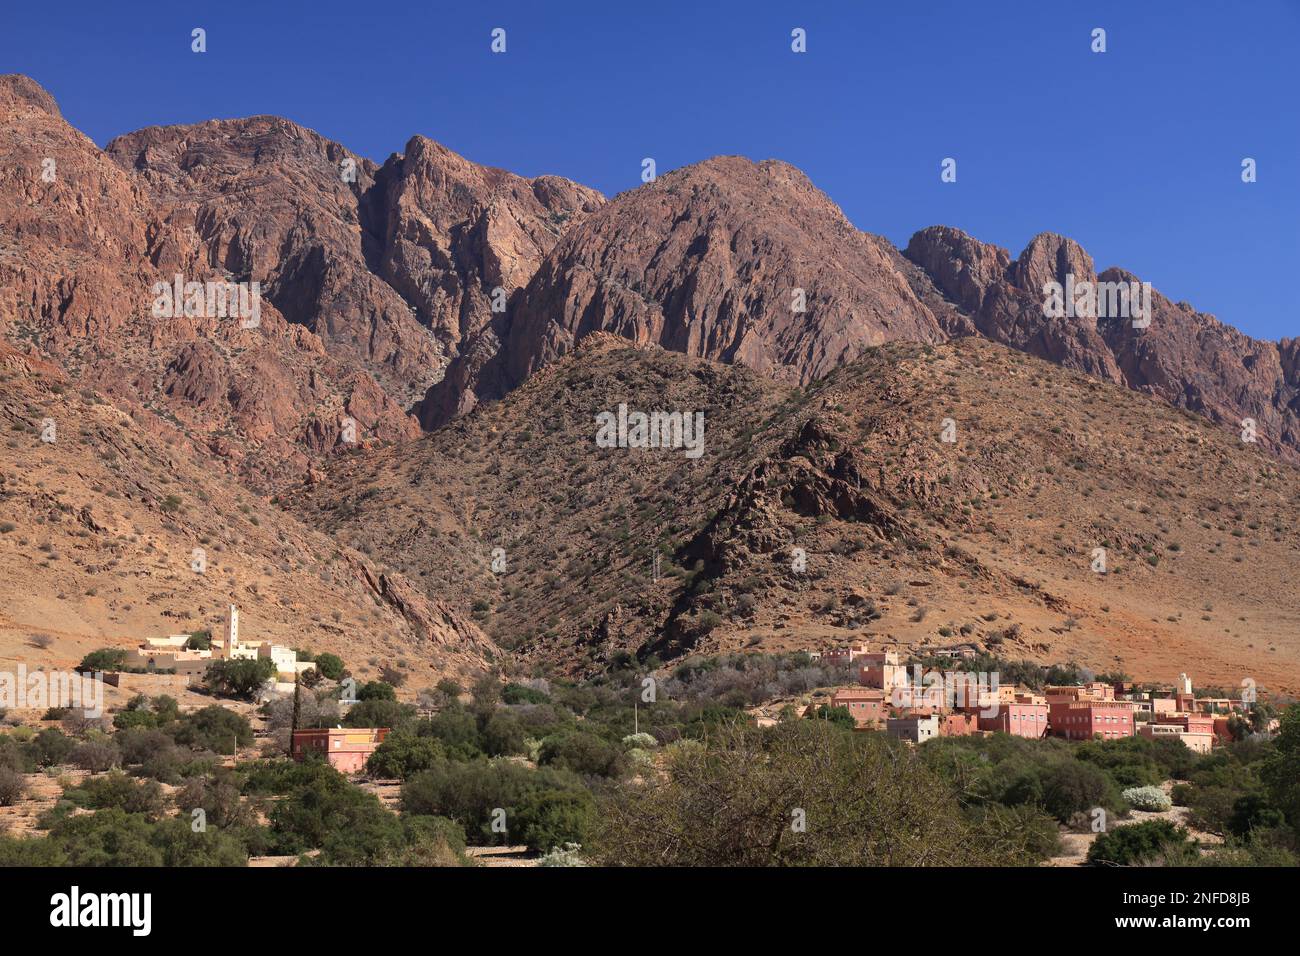 Anti-Atlas mountains landscape and mosque near Tafraout, Morocco. Stock Photo